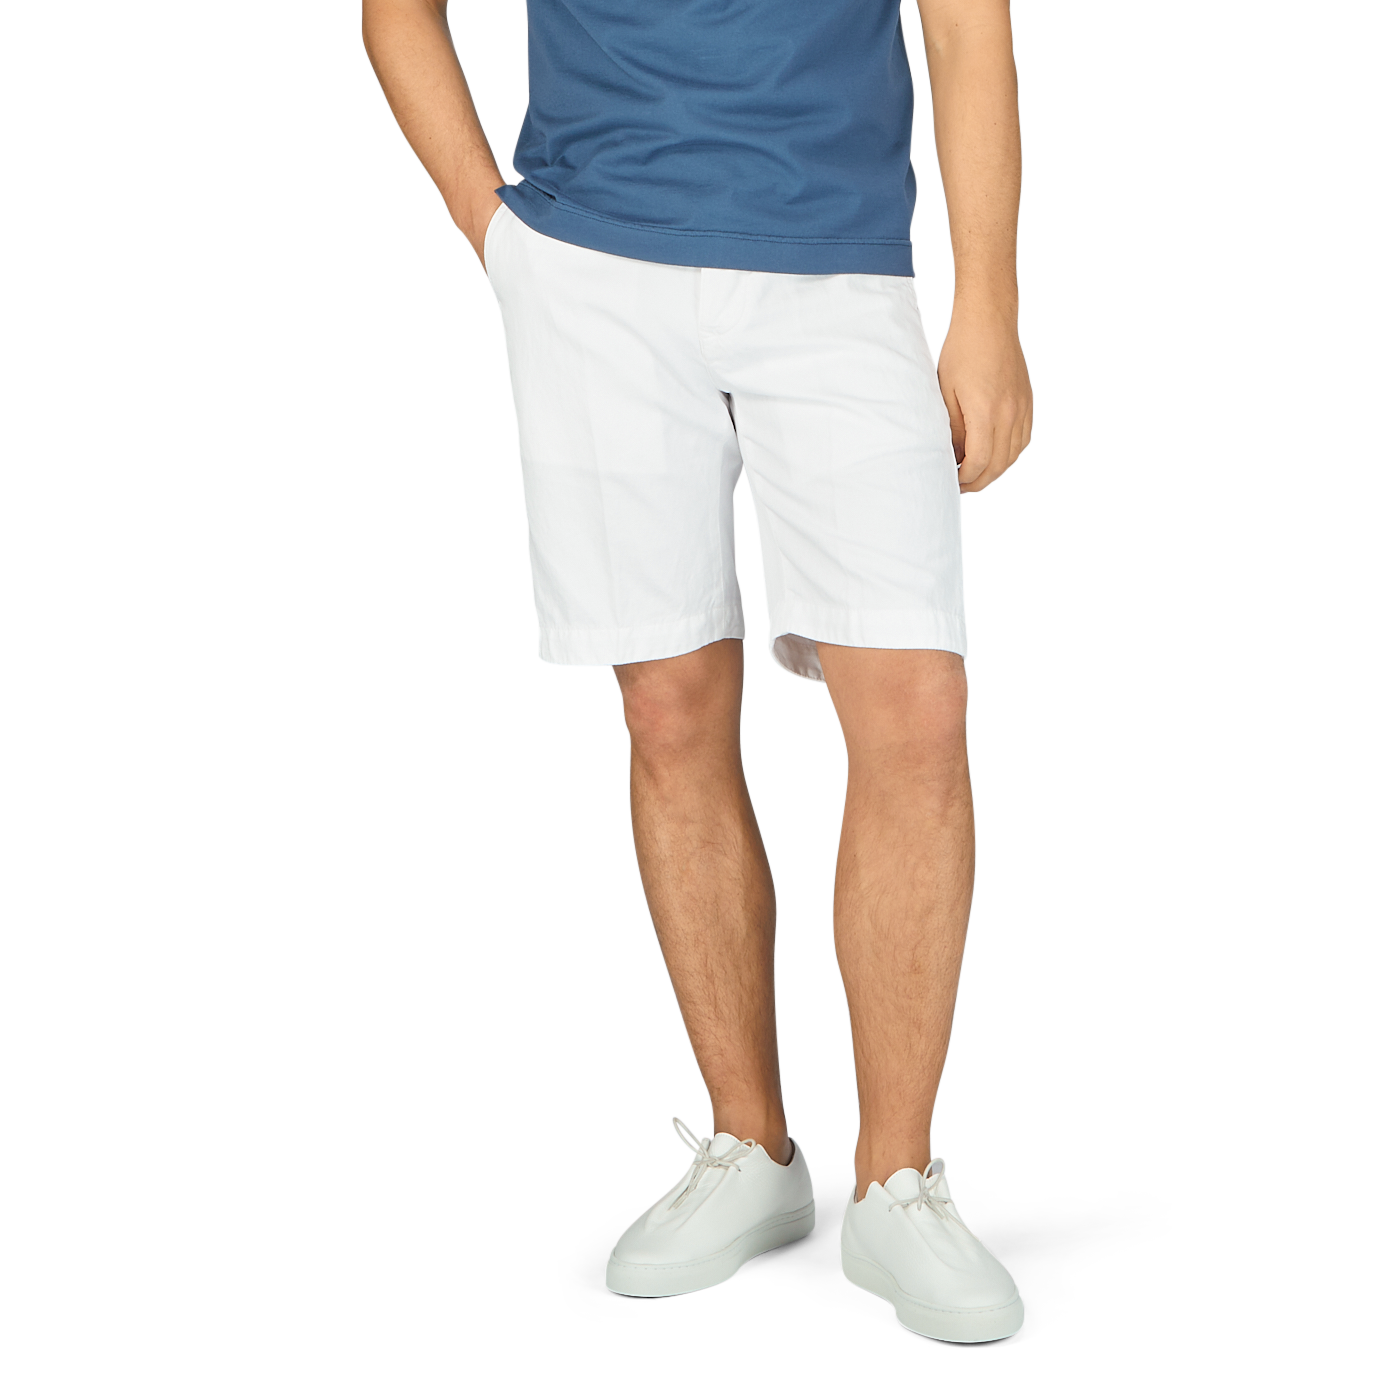 A man wearing Tela Genova white cotton linen Bermuda shorts and a blue t-shirt.